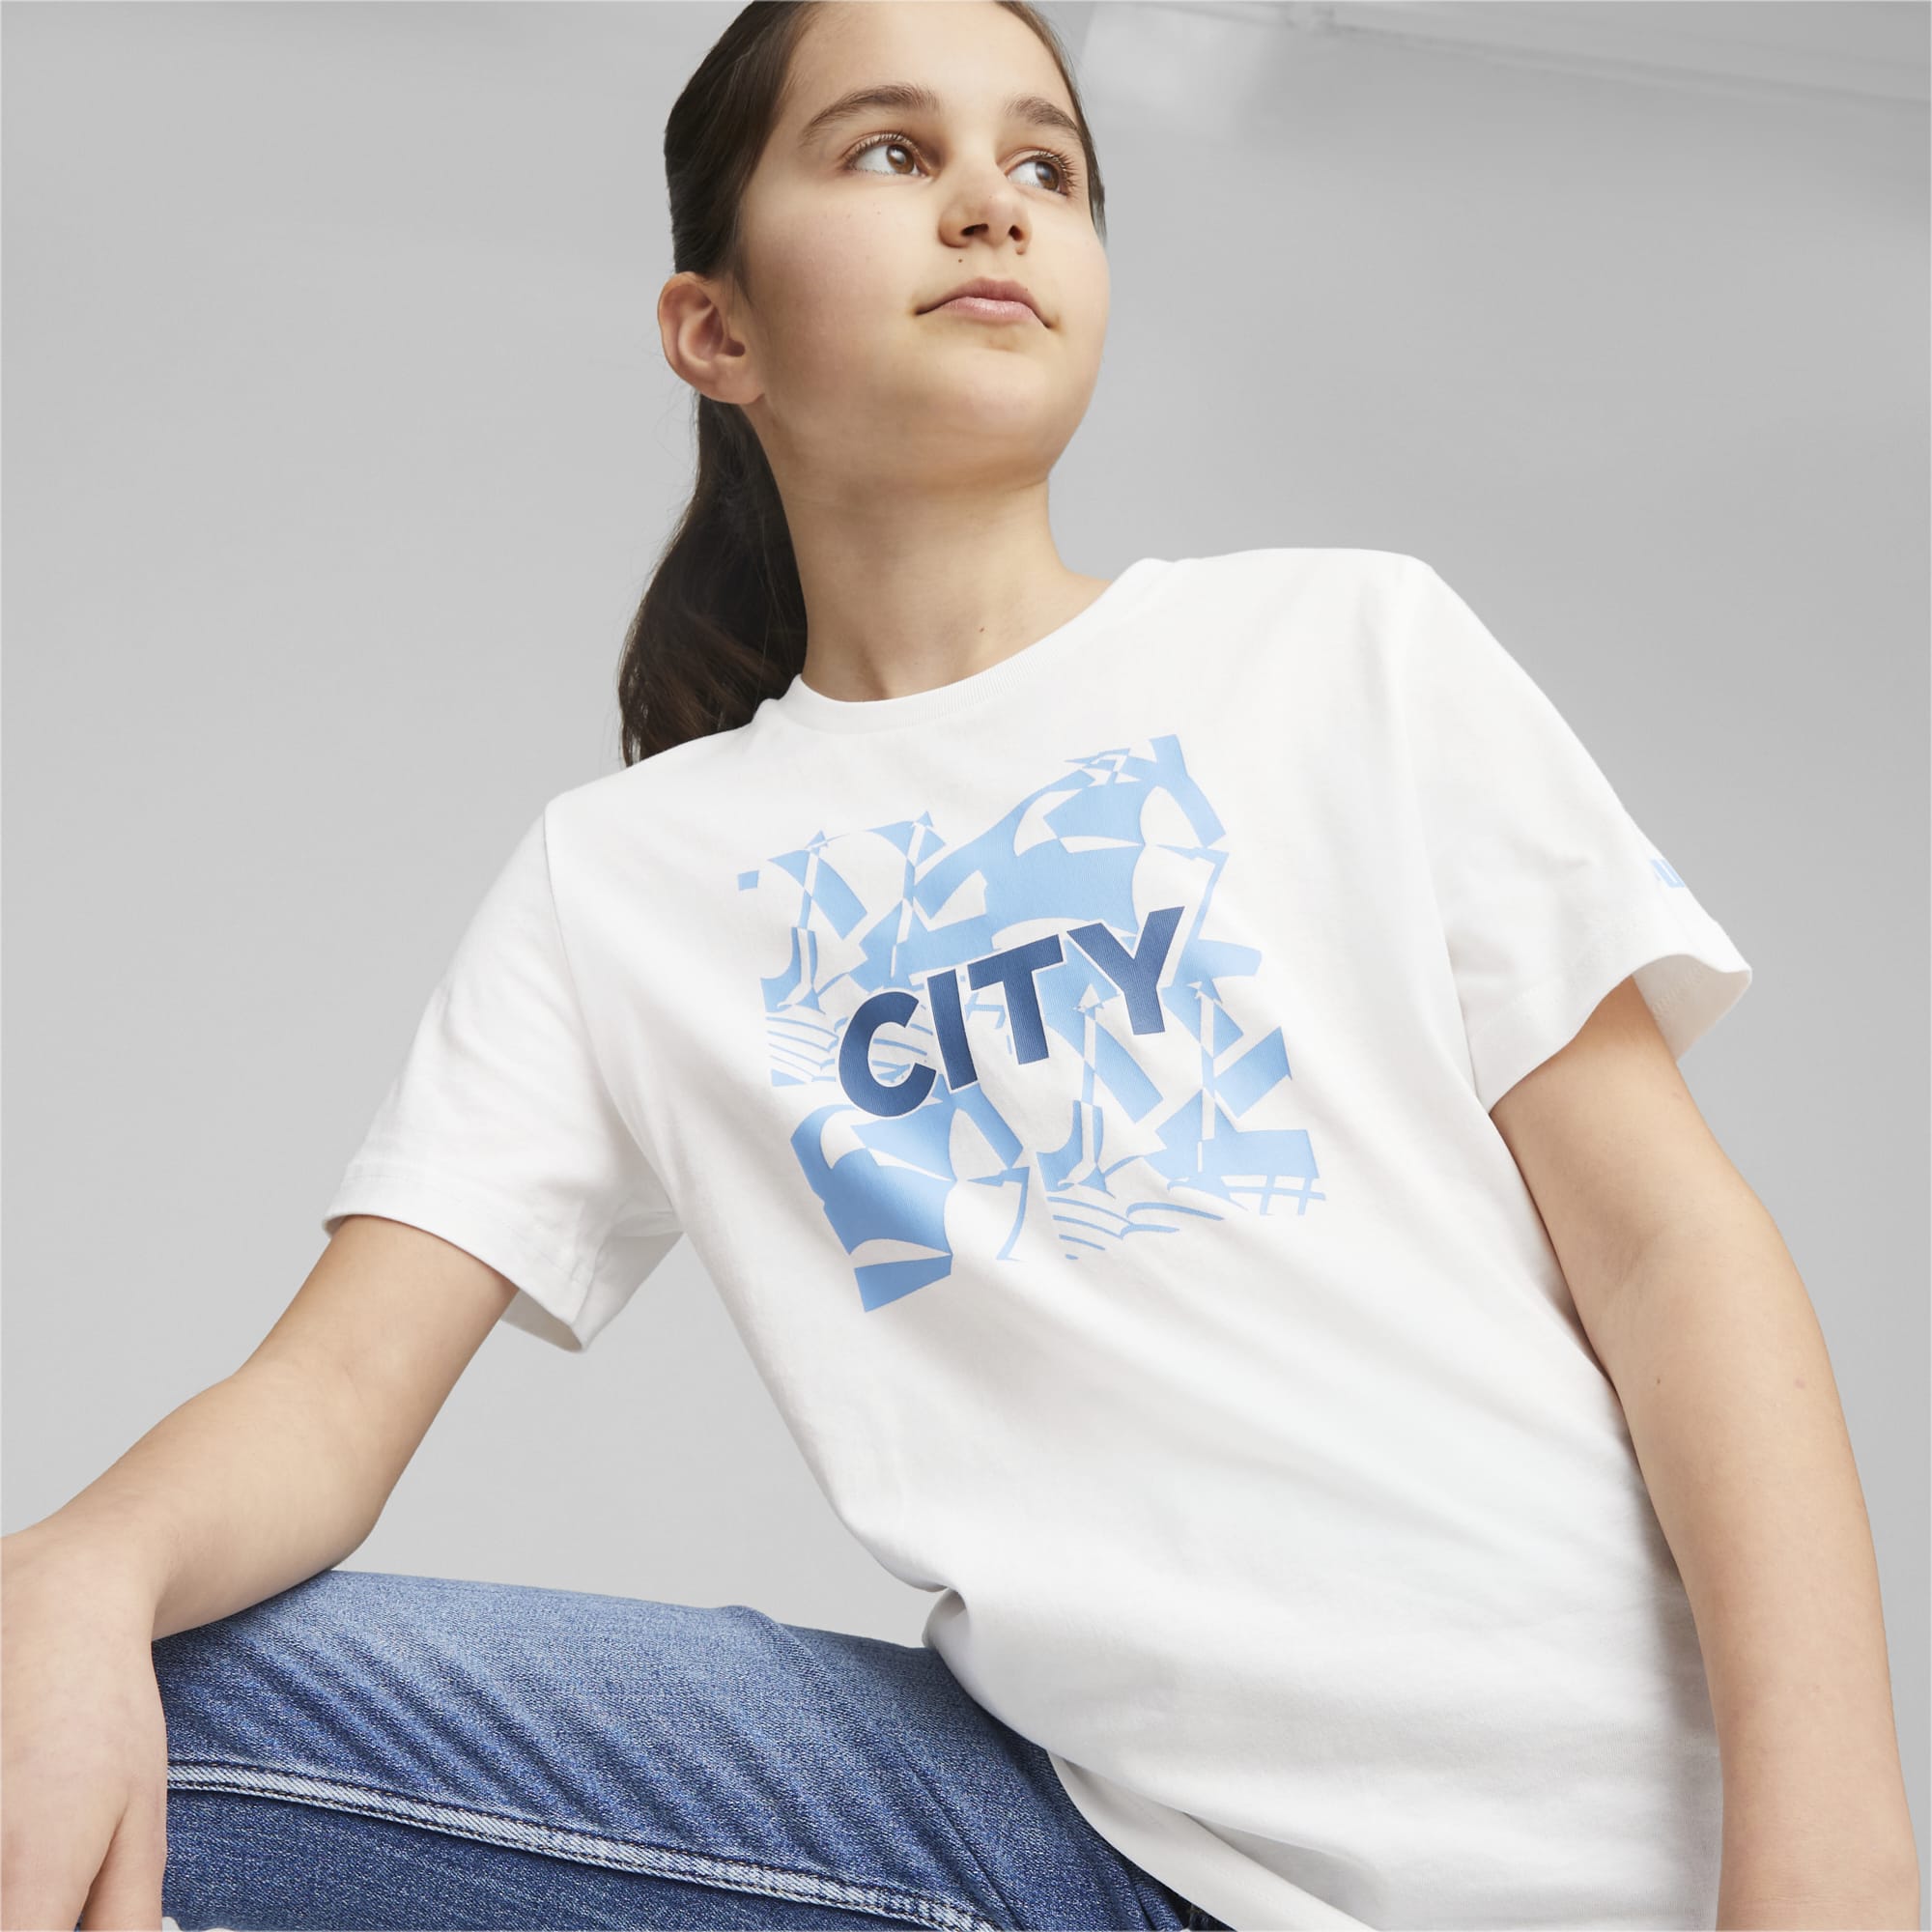 PUMA Camiseta Juvenil Manchester City Ftblcore Gráfica, Blanco/Azul